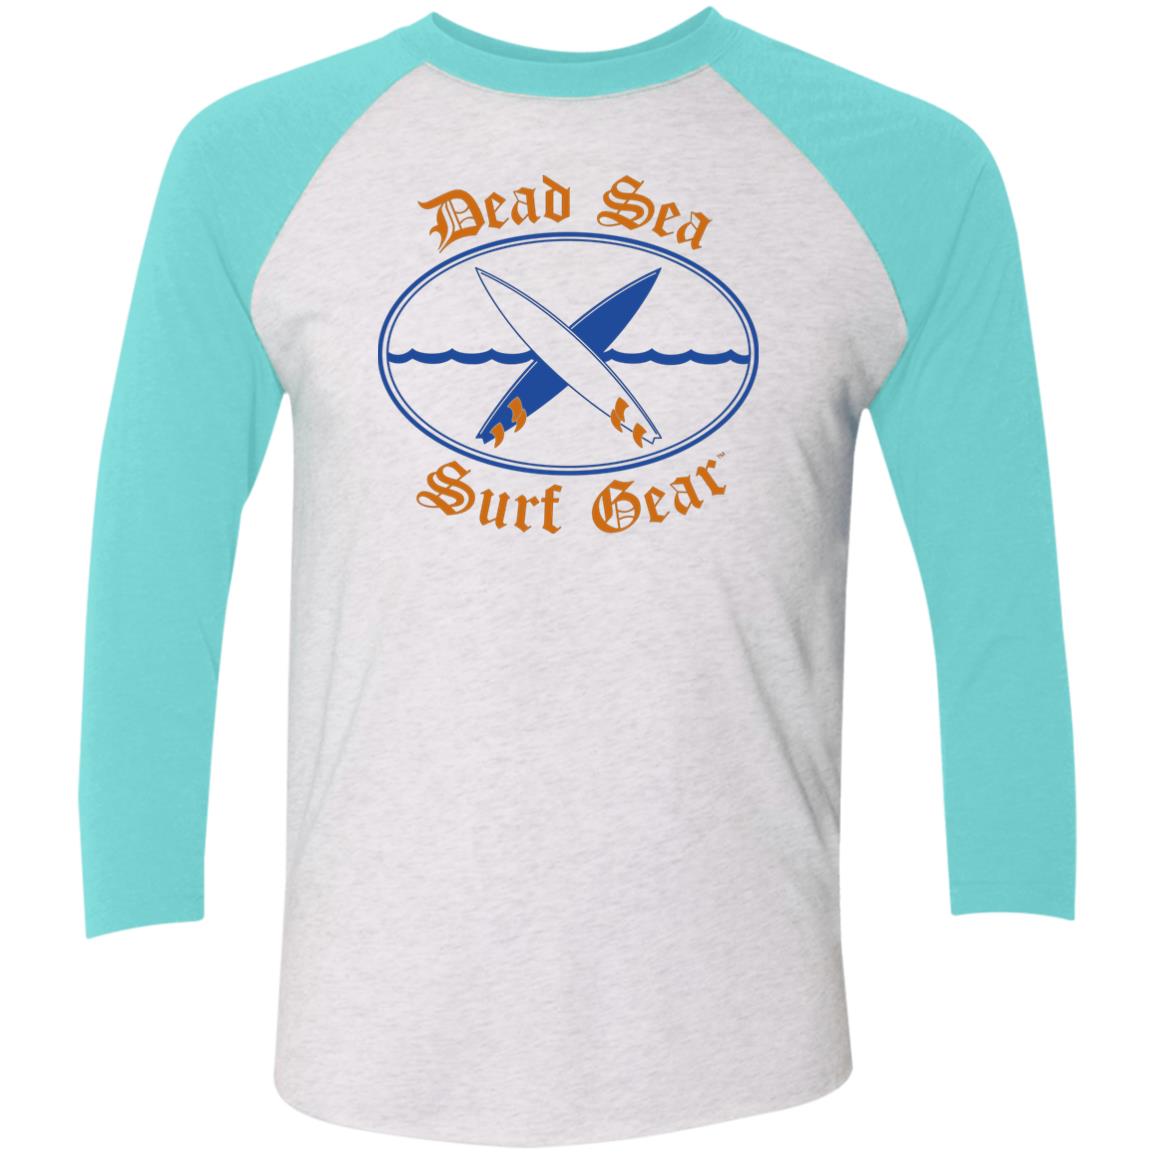 Dead Sea Surf Gear Men's Premium 3/4 Sleeve Raglan